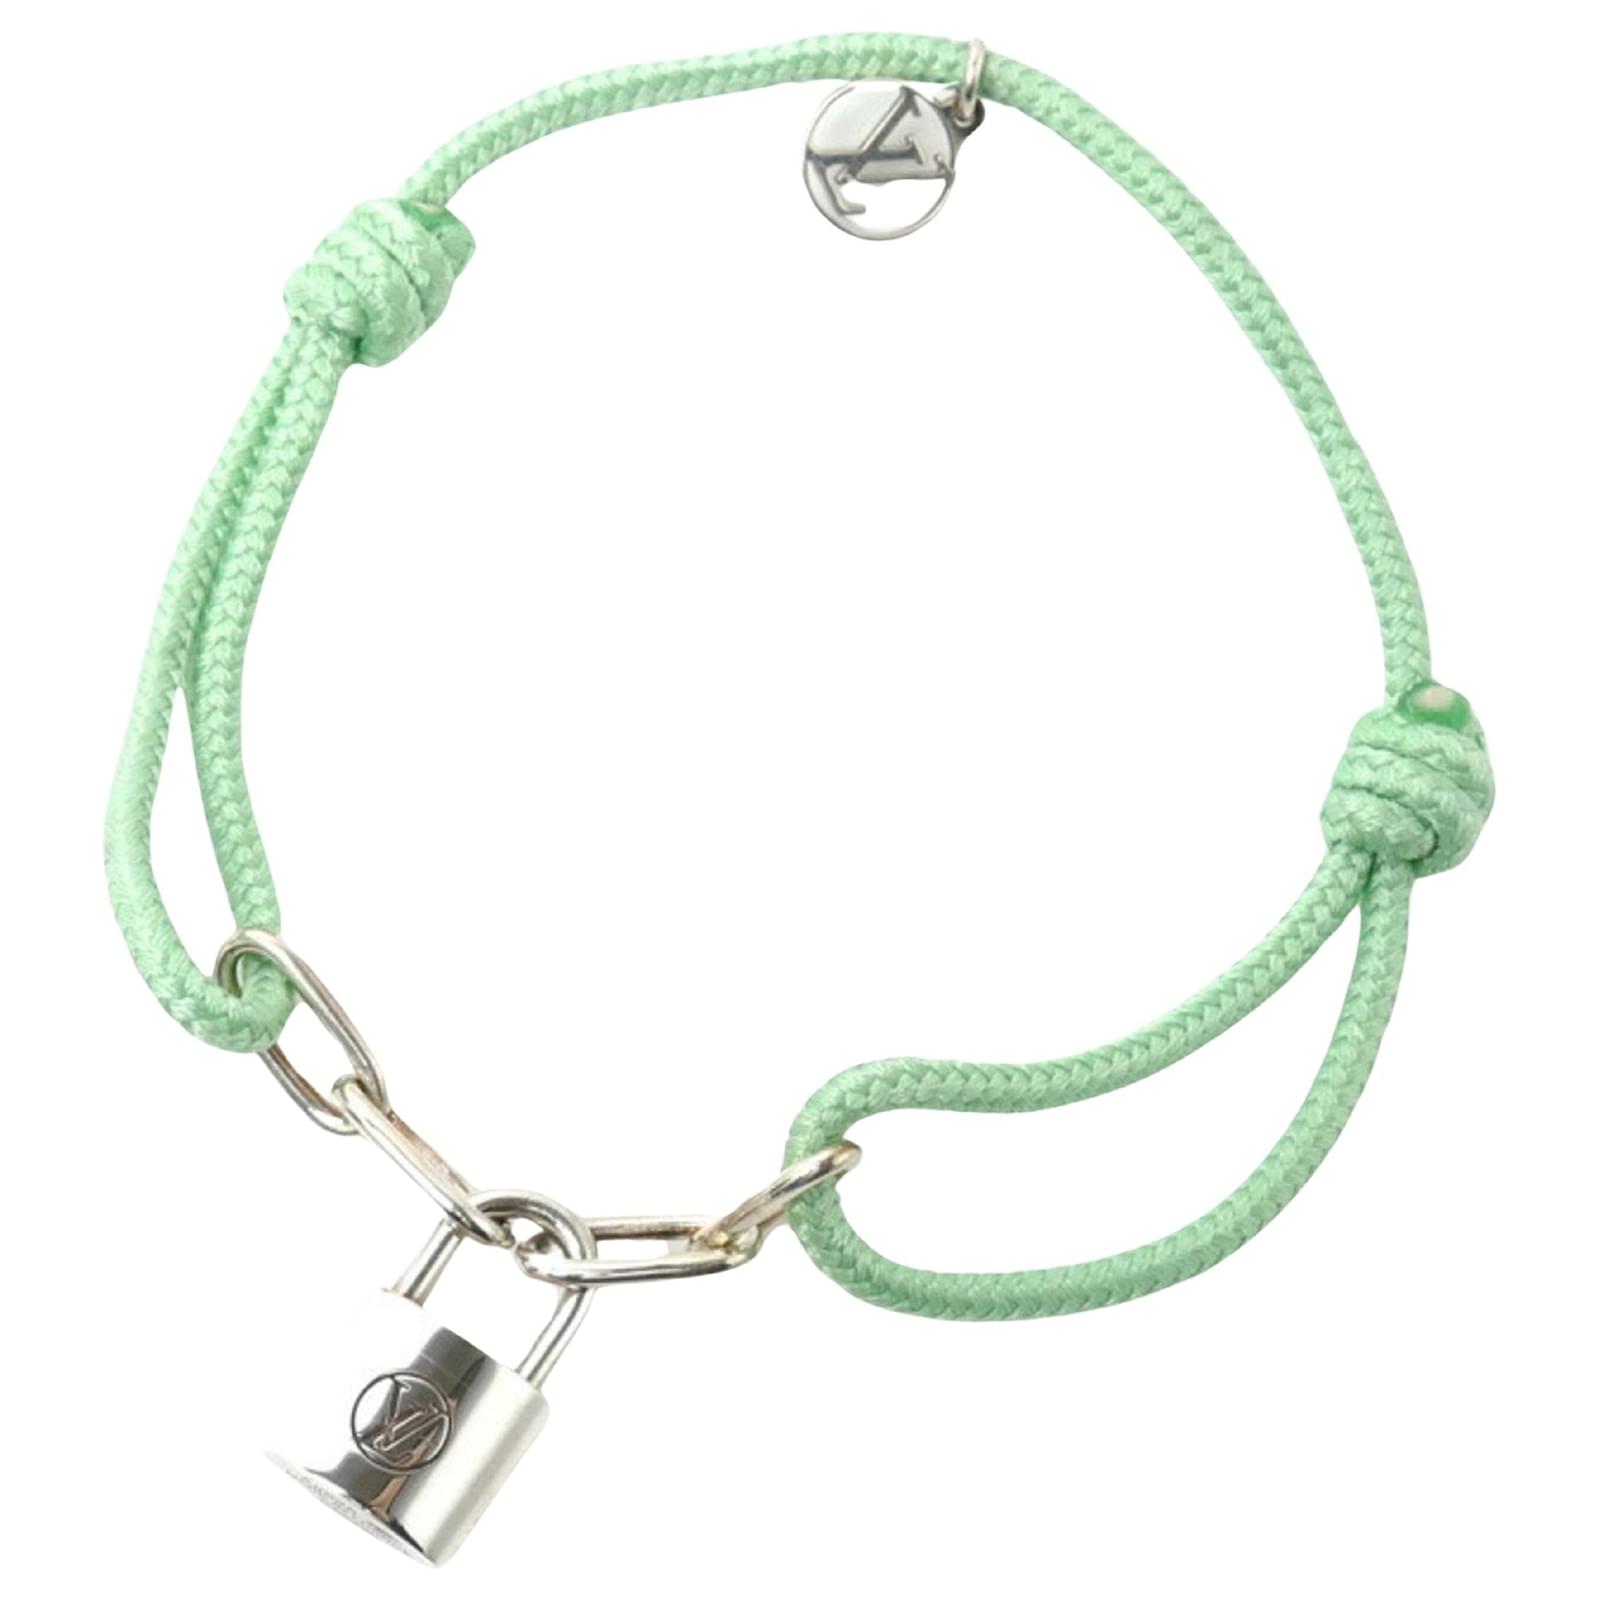 Louis Vuitton x UNICEF Drop New Virgil-Designed Bracelet | Hypebeast